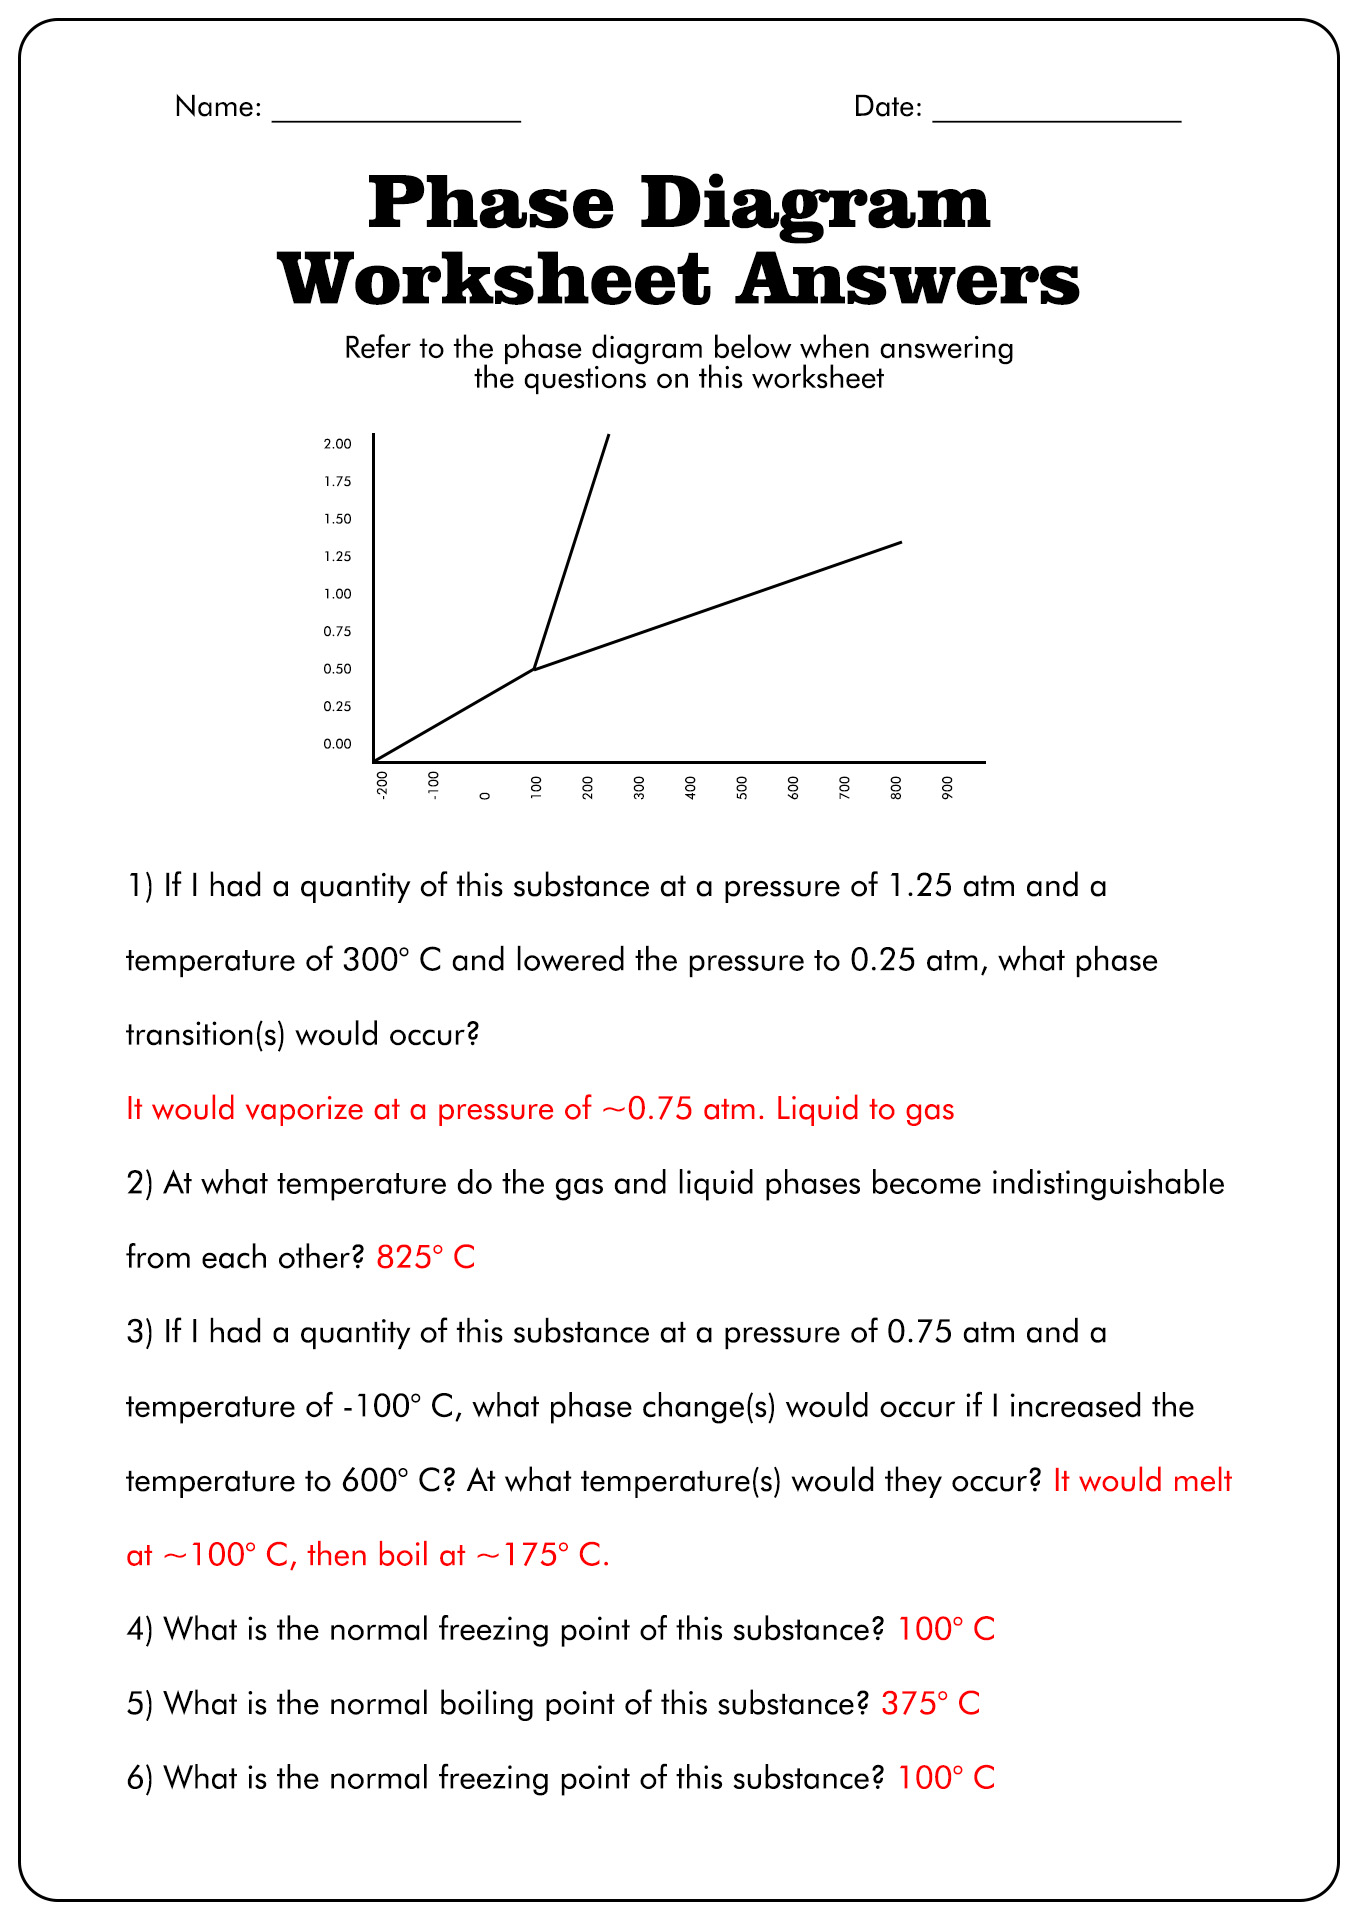 Phase Change Diagram Worksheet Answers